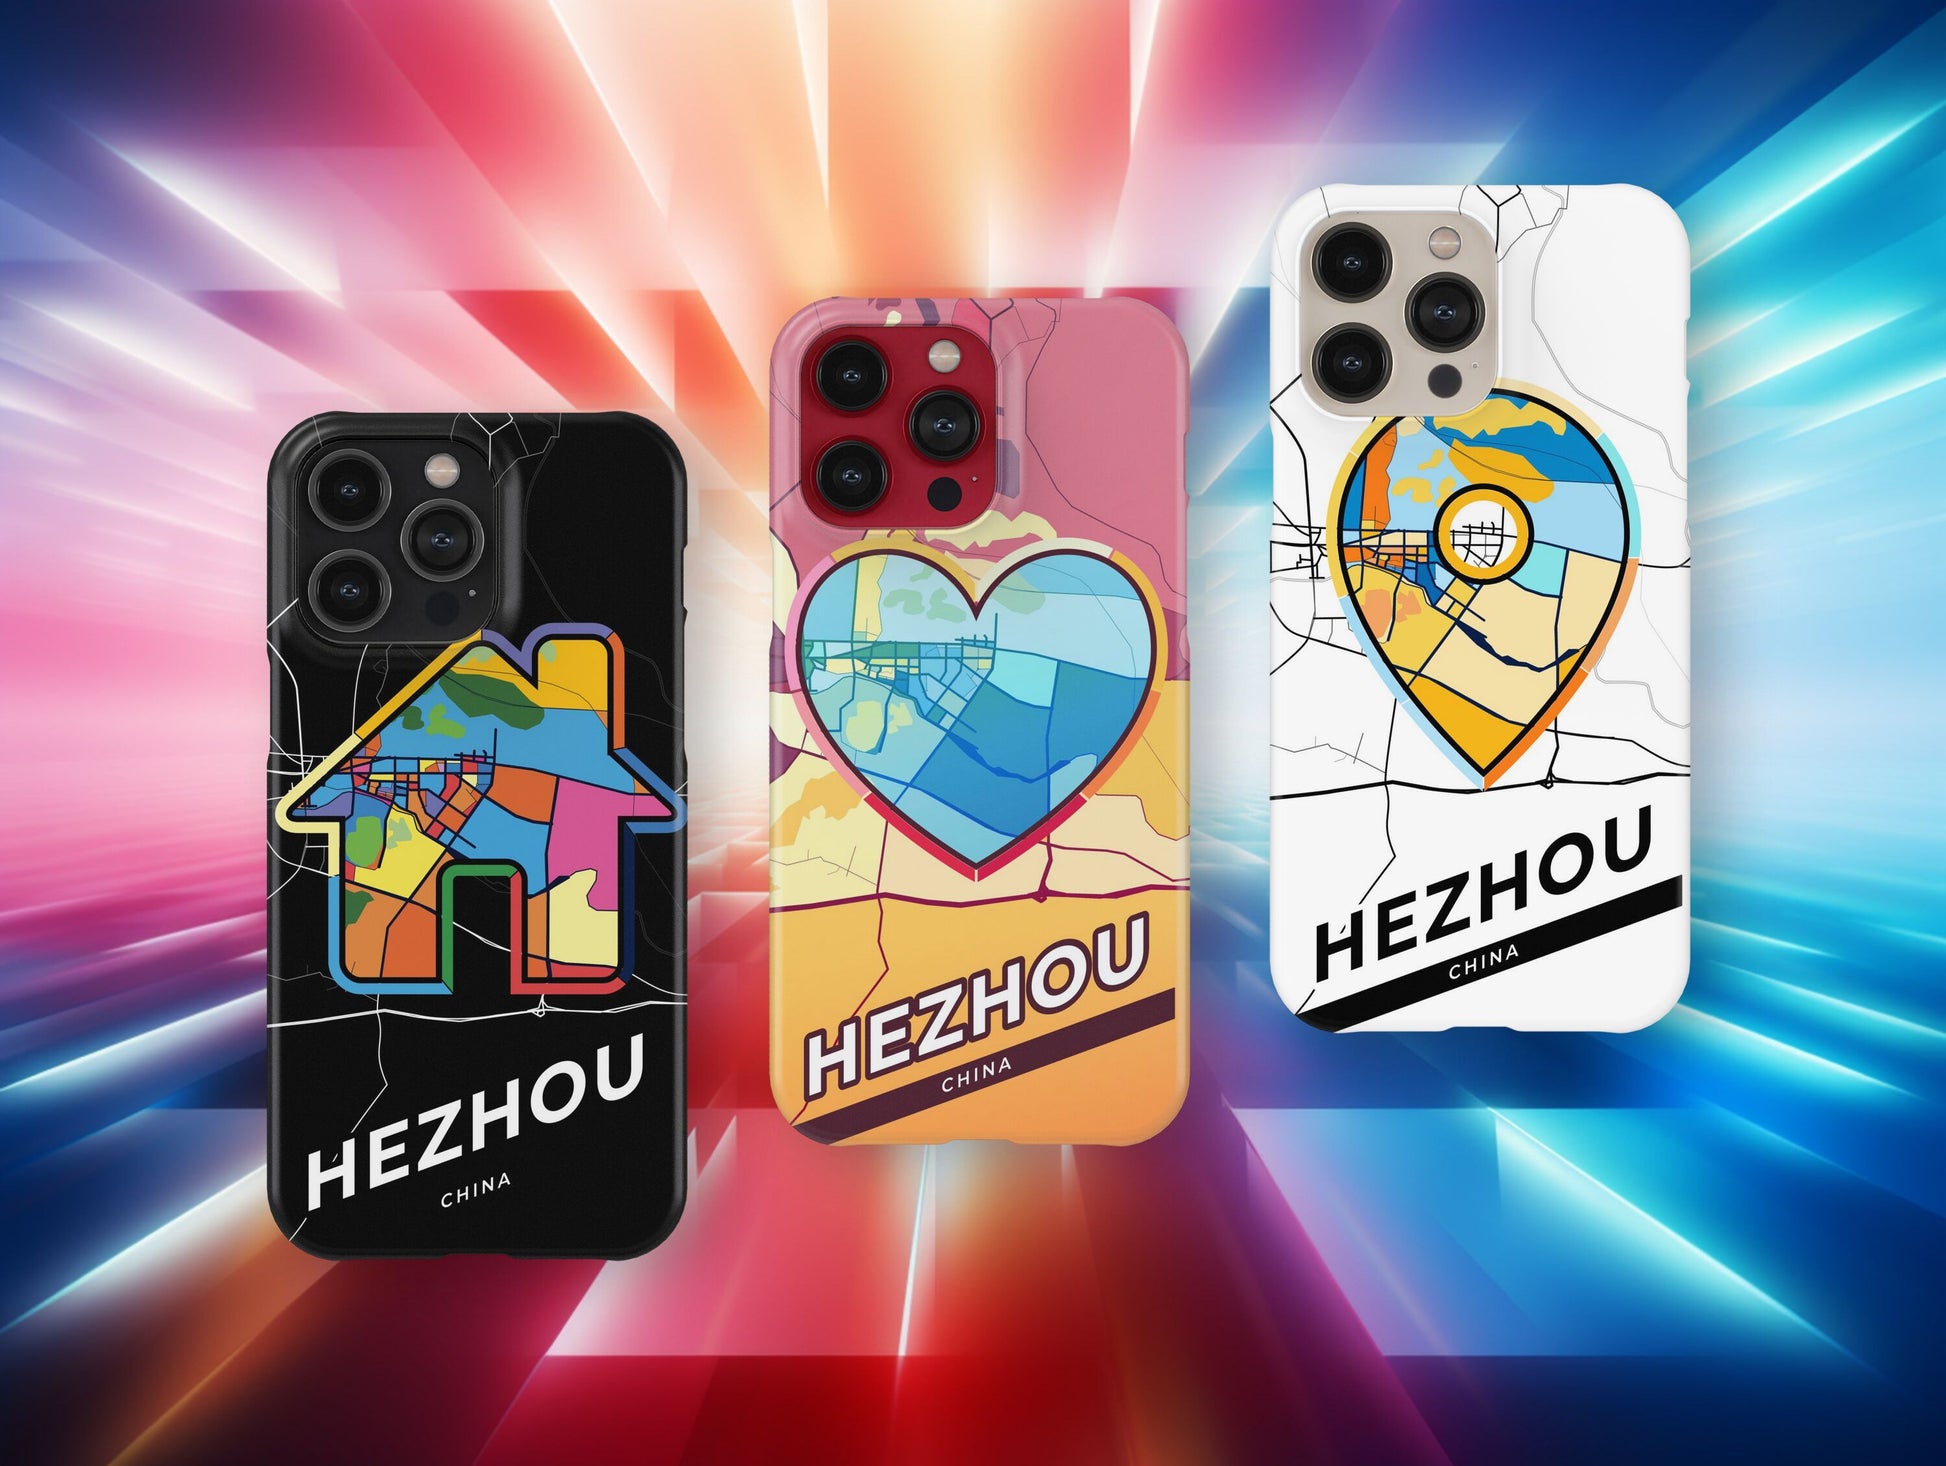 Hezhou China slim phone case with colorful icon. Birthday, wedding or housewarming gift. Couple match cases.